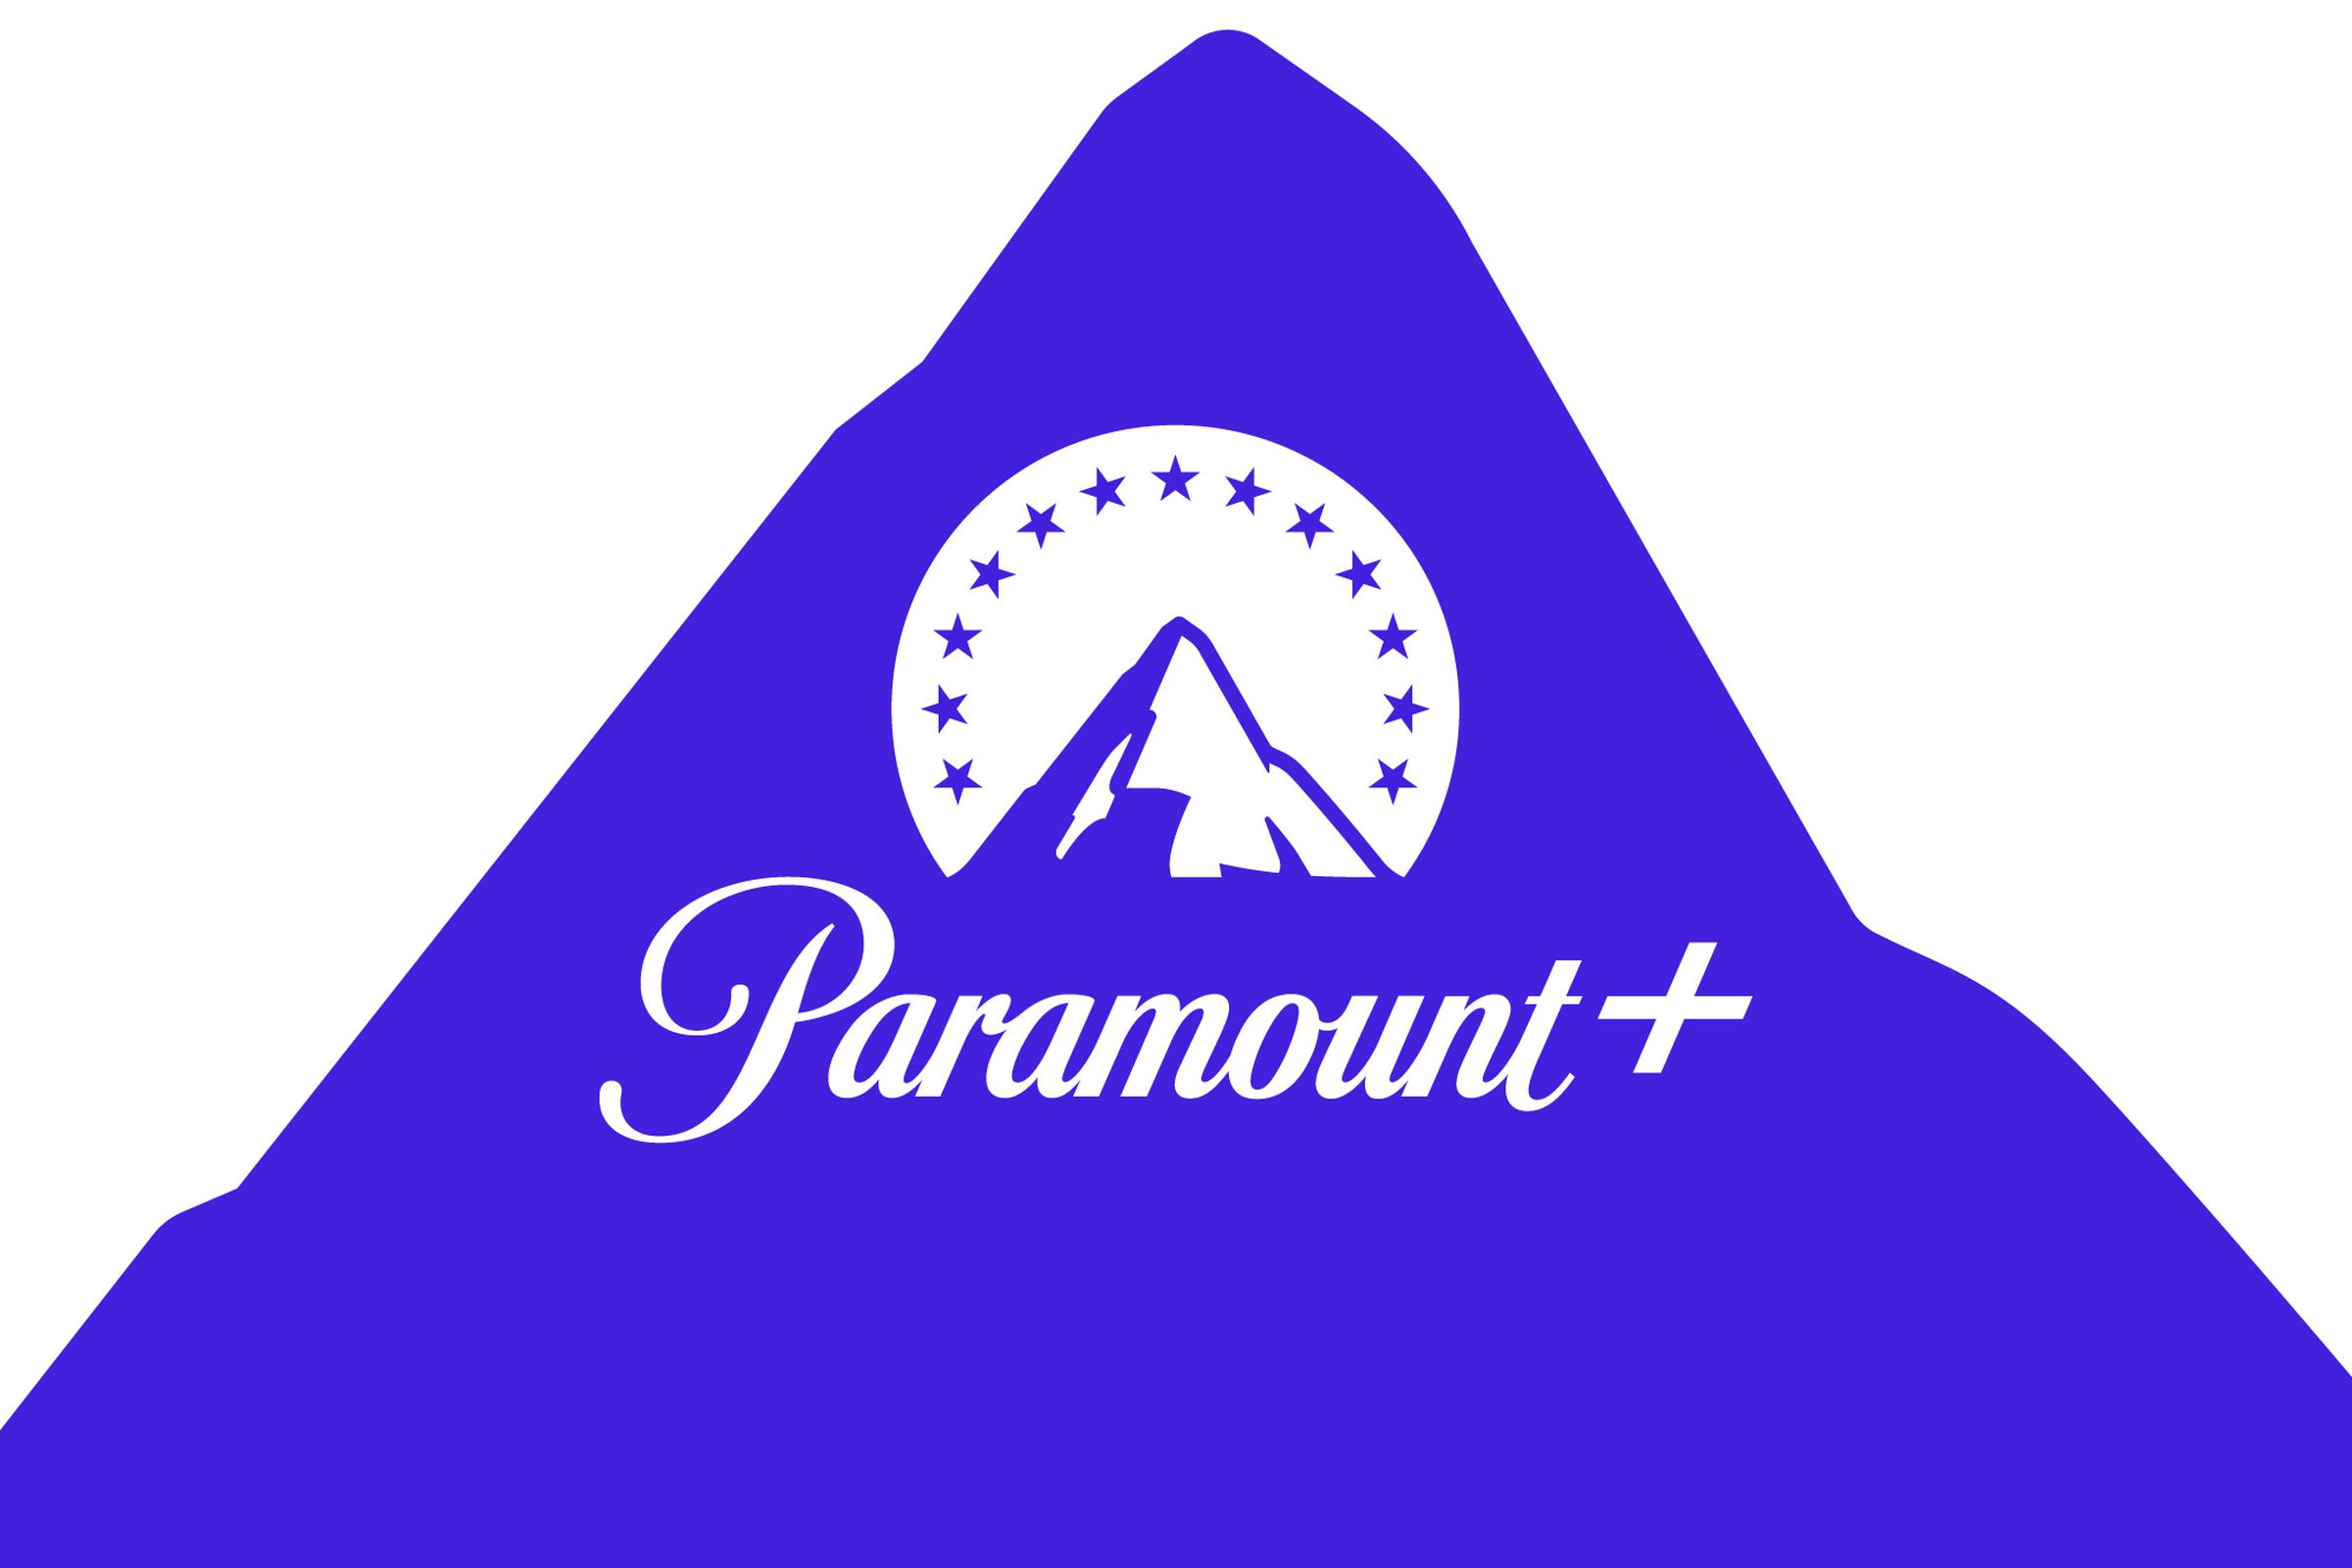 An illustration of the Paramount Plus logo.